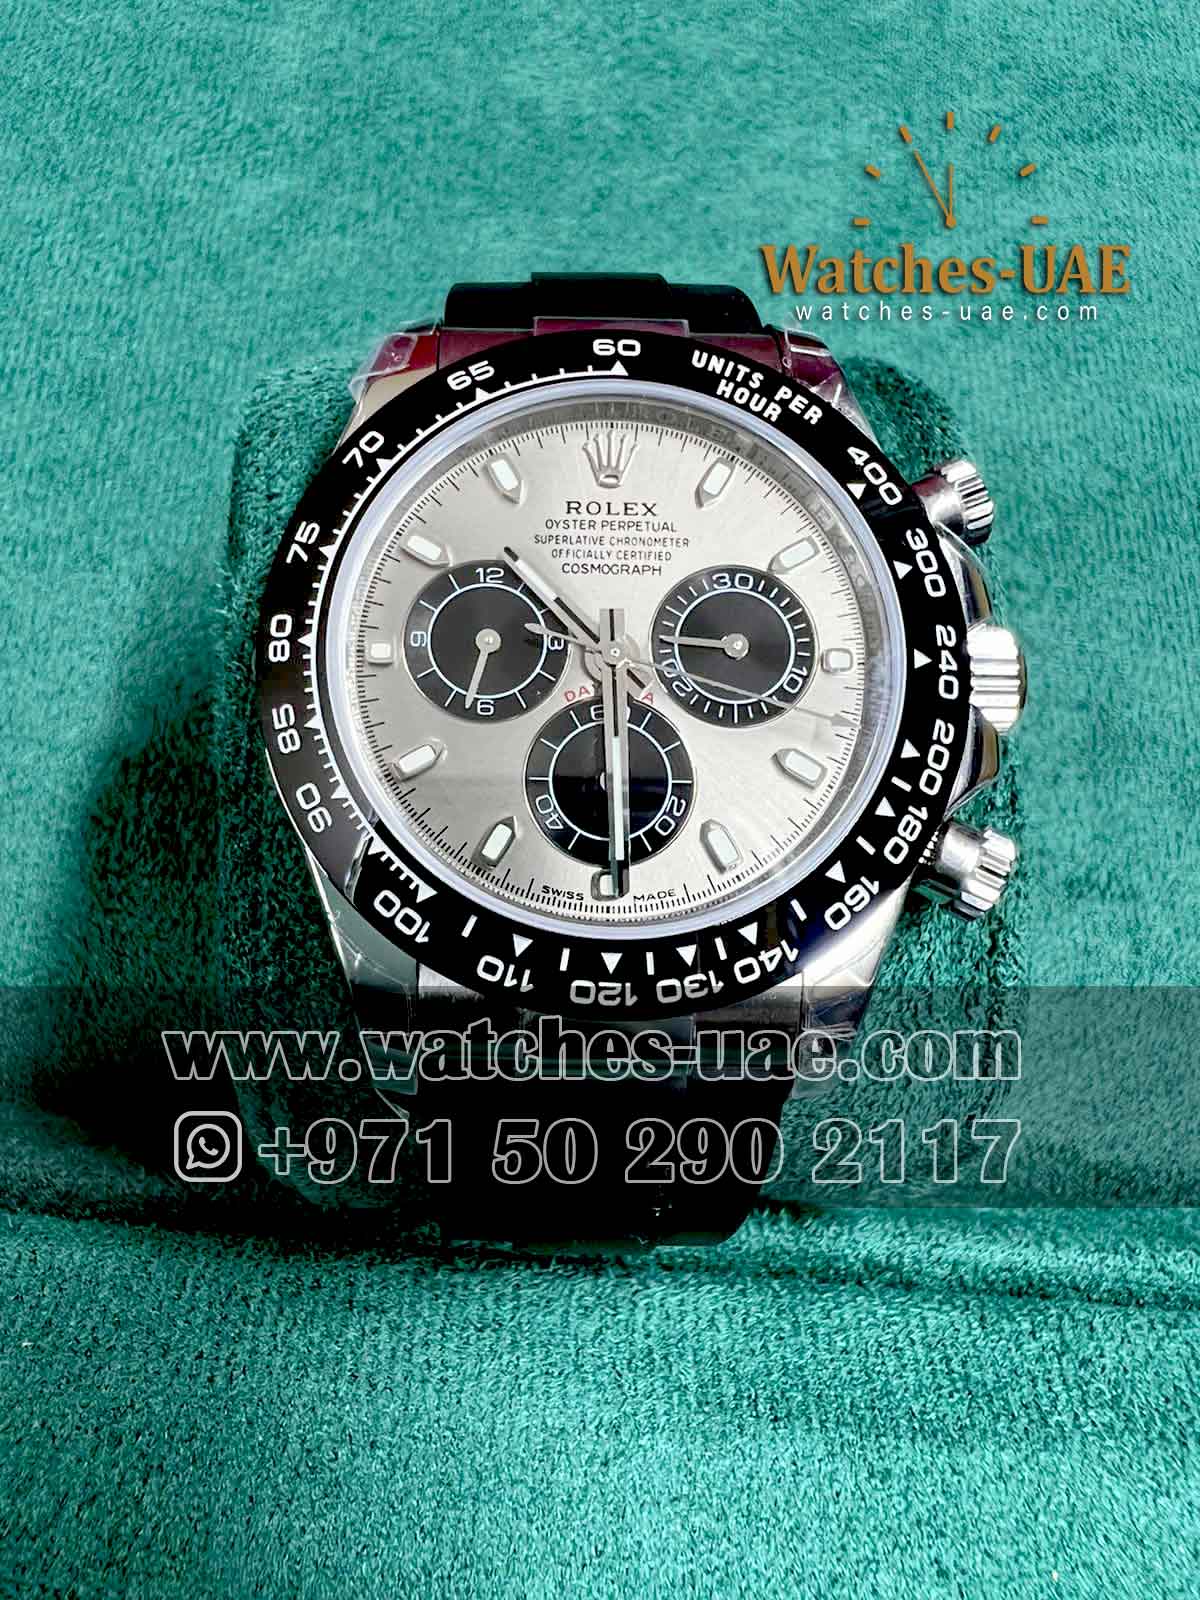 Rolex Daytona Gray dial - Watches UAE